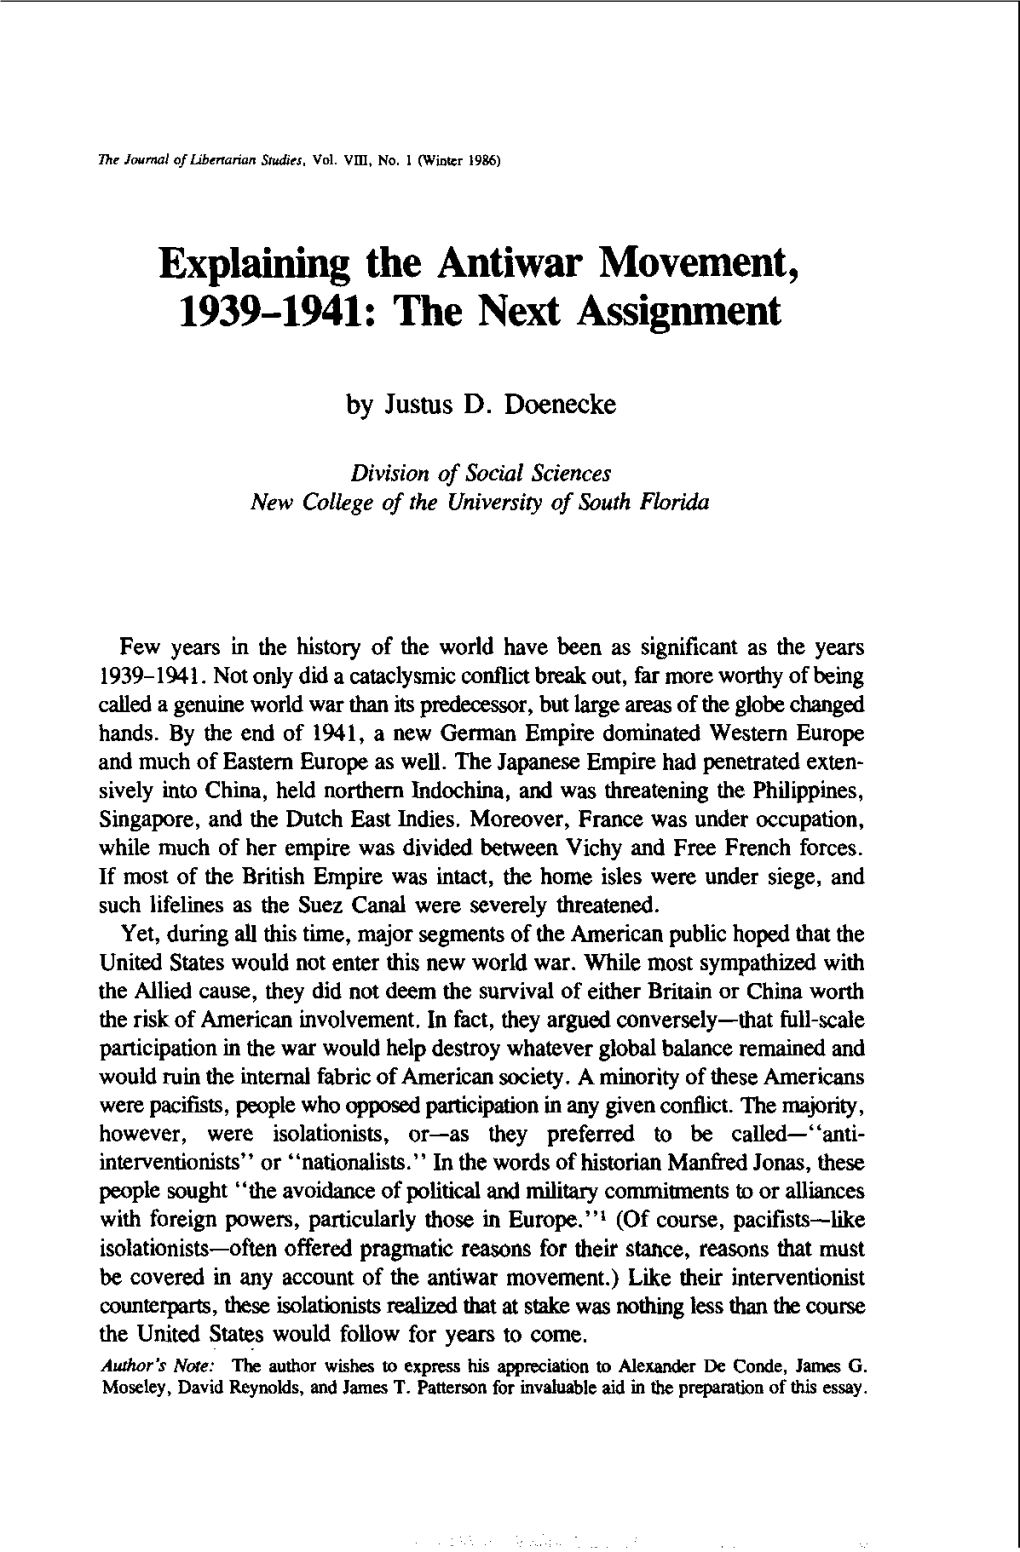 Explaining the Antiwar Movement, 1939-1941: the Next Assignment